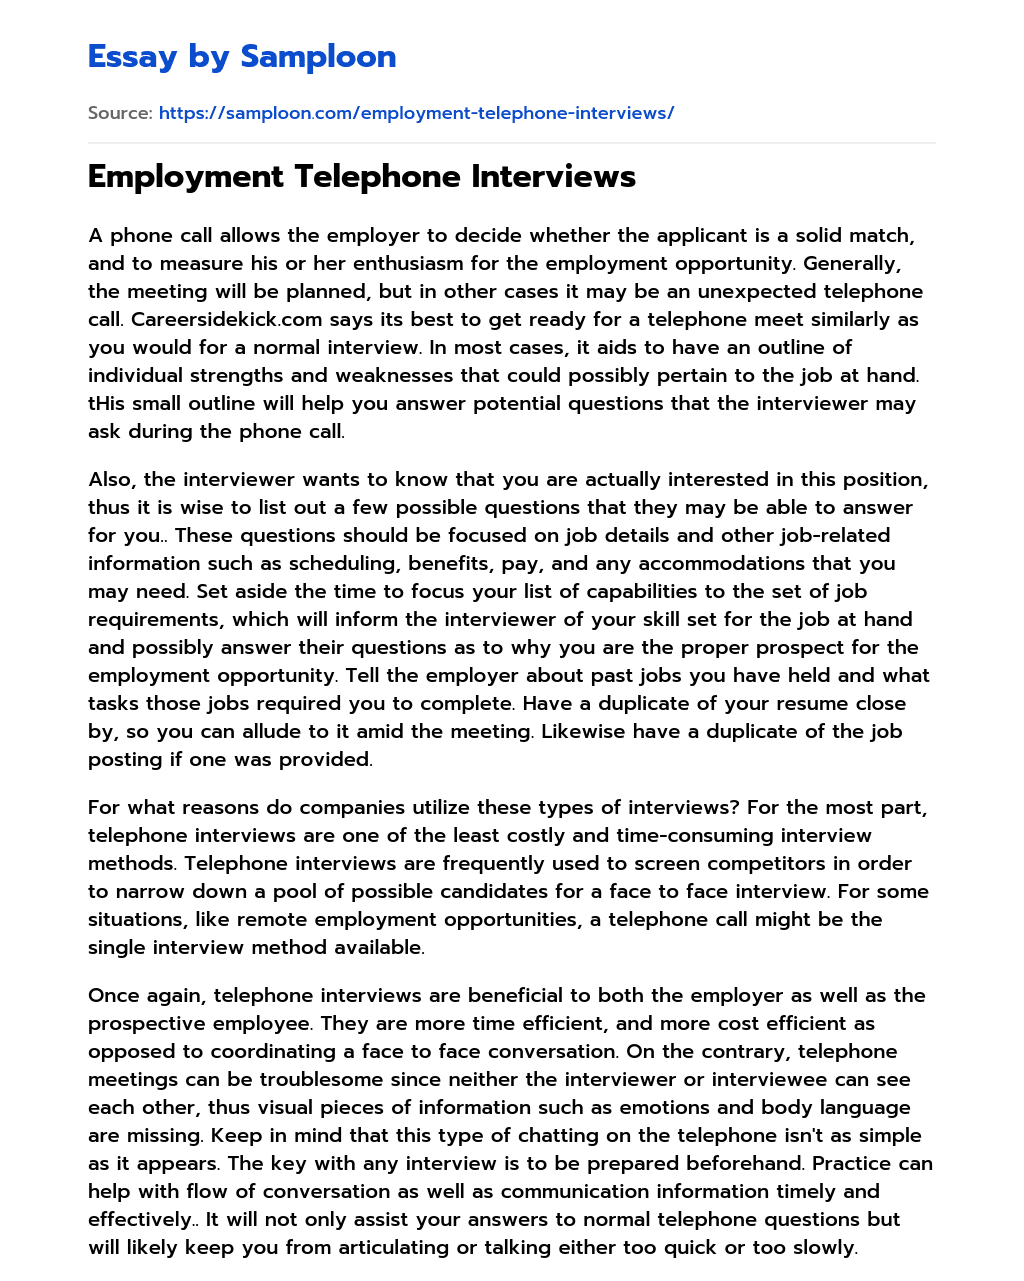 Employment Telephone Interviews essay